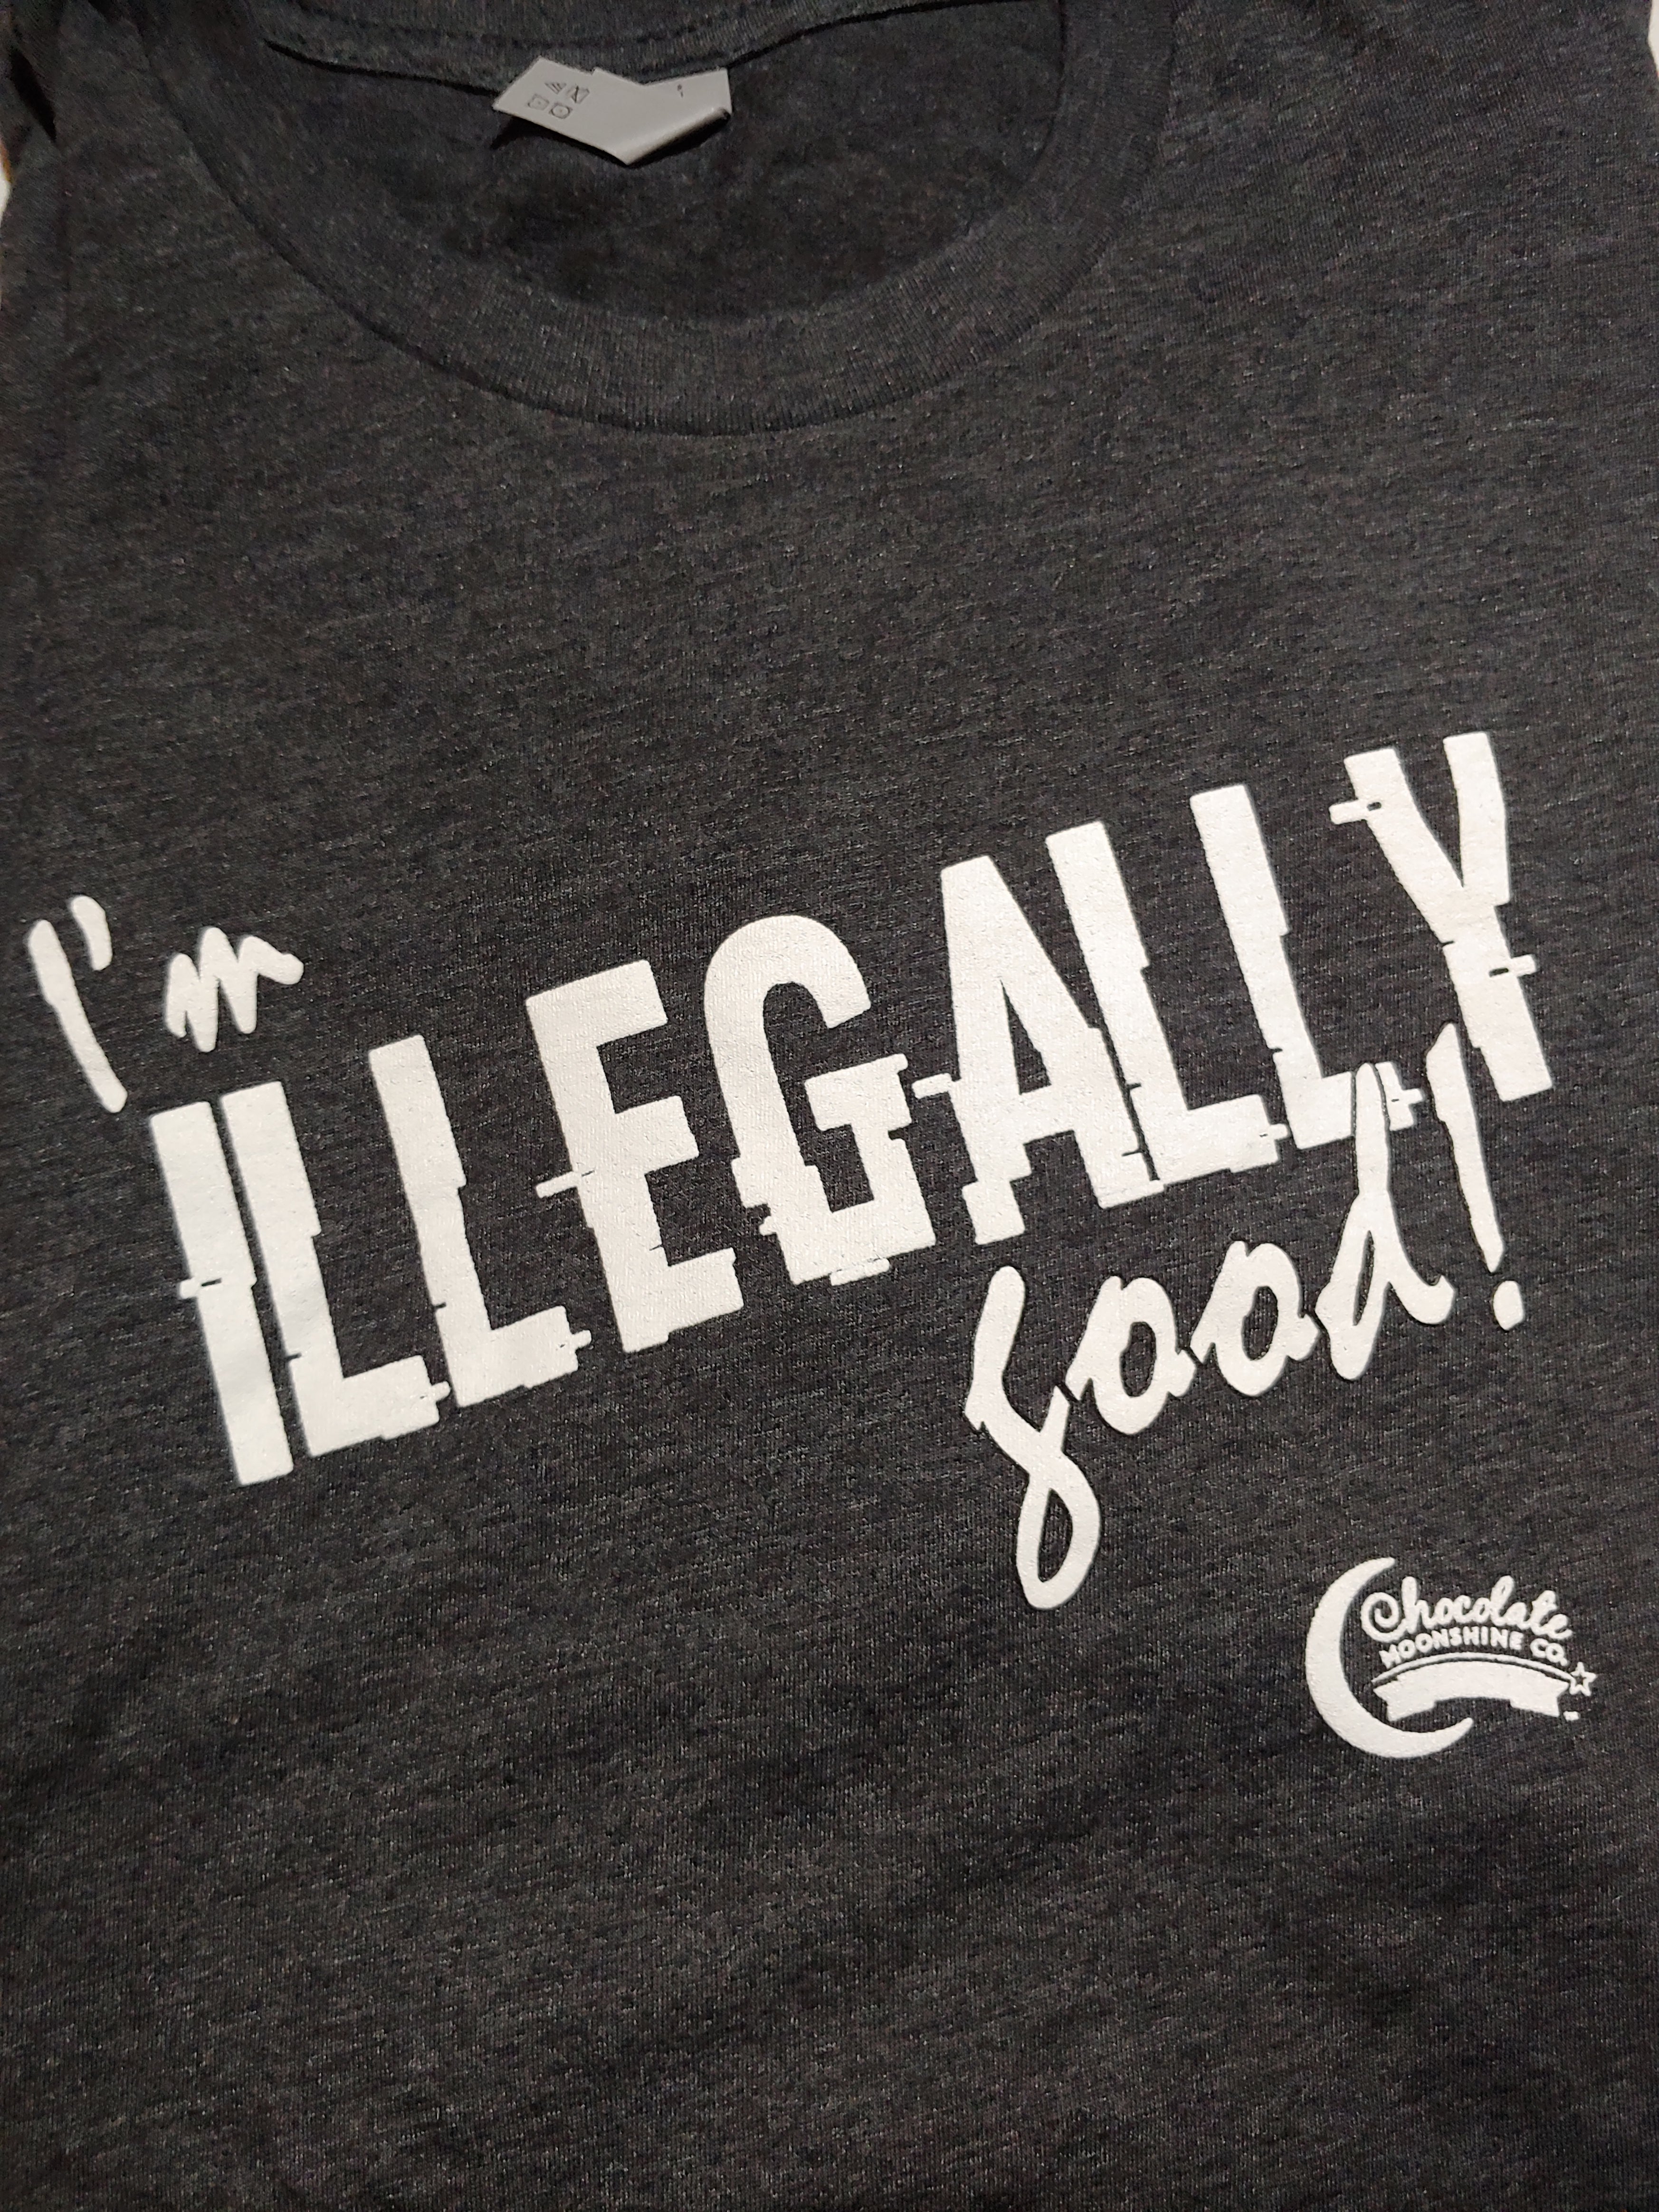 I'm Illegally Good T-Shirt